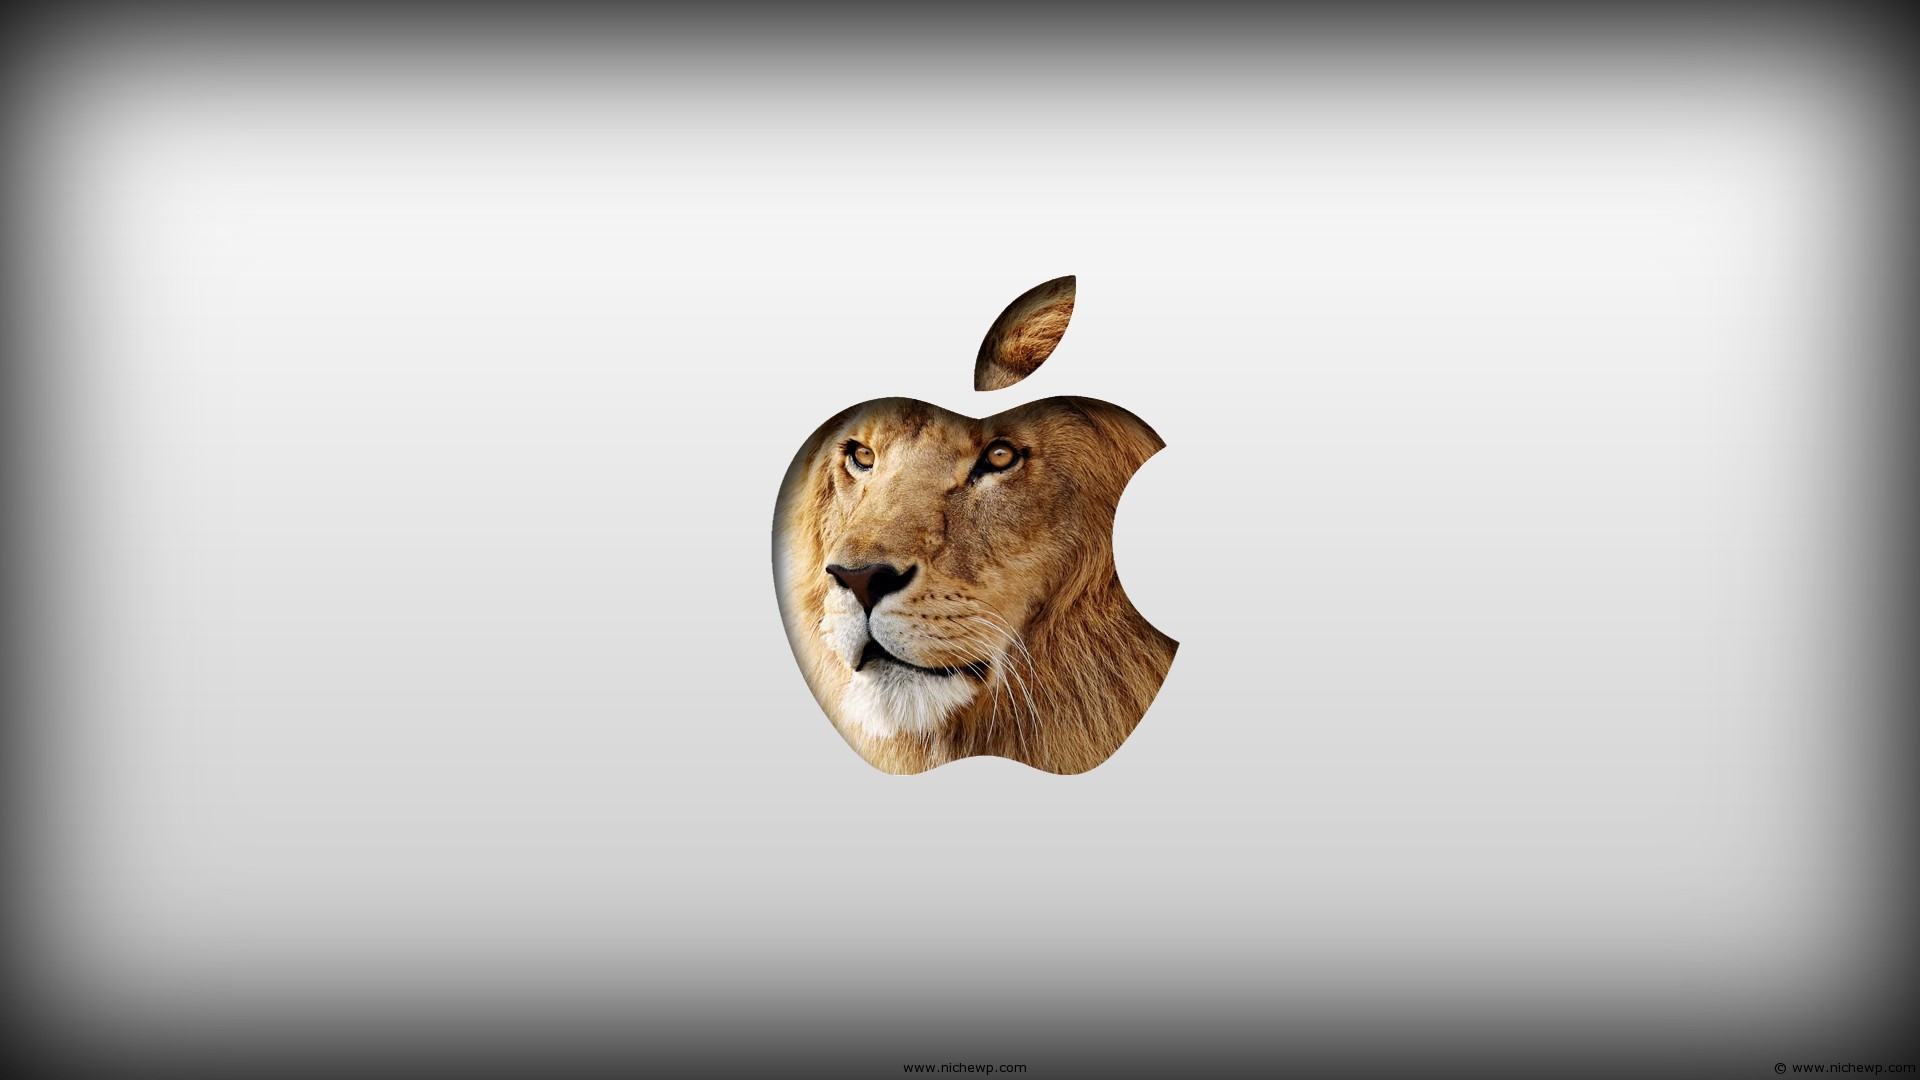 Mac Os X Lion Wallpaper Jpg